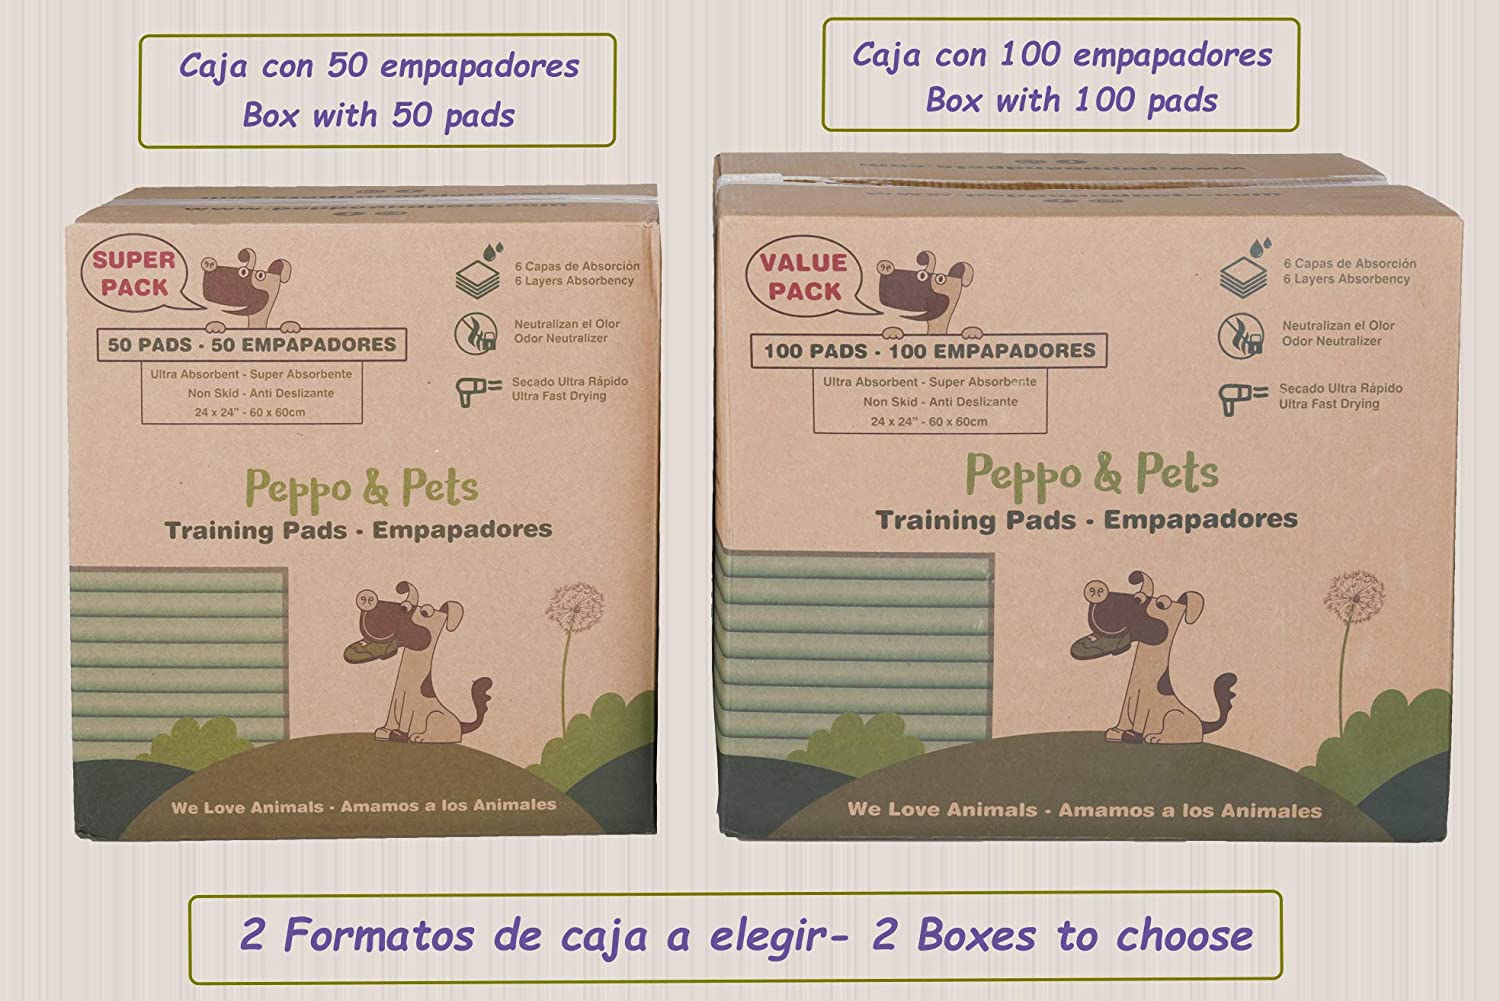  Peppo and Pets -100 empapadores para Entrenar Cachorros - 6 Capas - Súper absorbentes- 60 cm x 60 cm- Secado rápido 